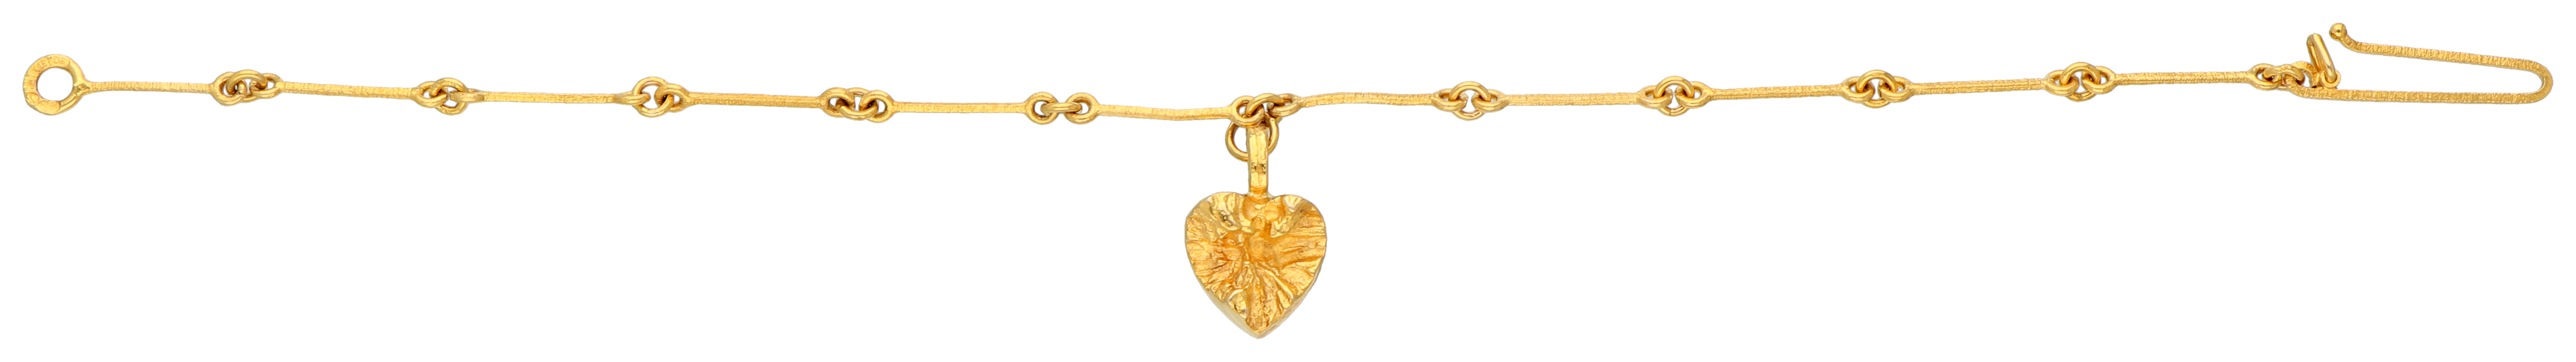 No Reserve - Lapponia 14K yellow gold 'Heart' bracelet by Björn Weckström. - Image 3 of 4